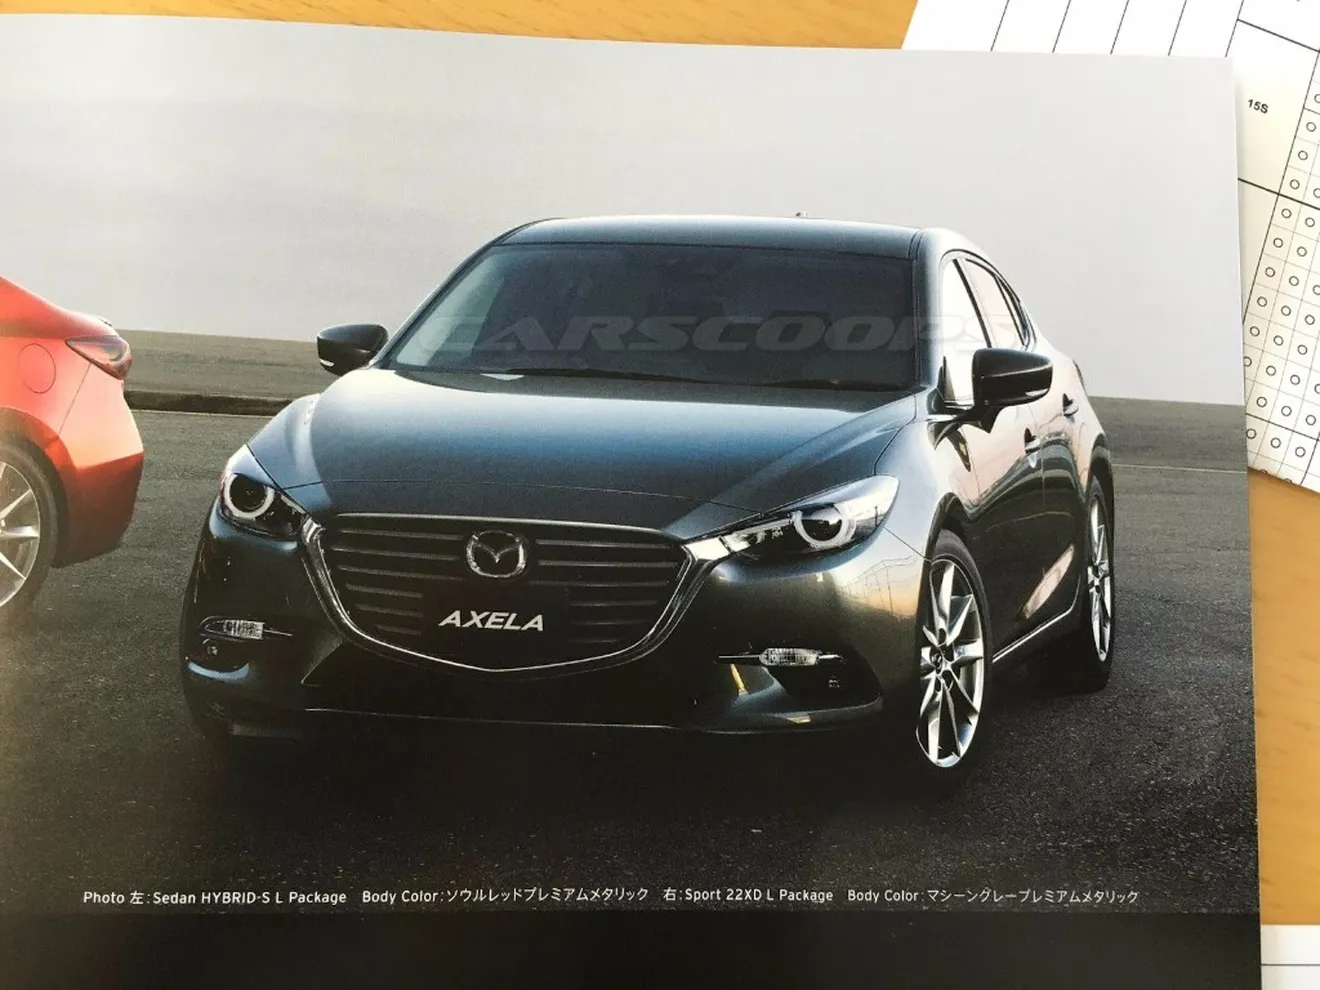 Mazda3 2017, primera imagen filtrada